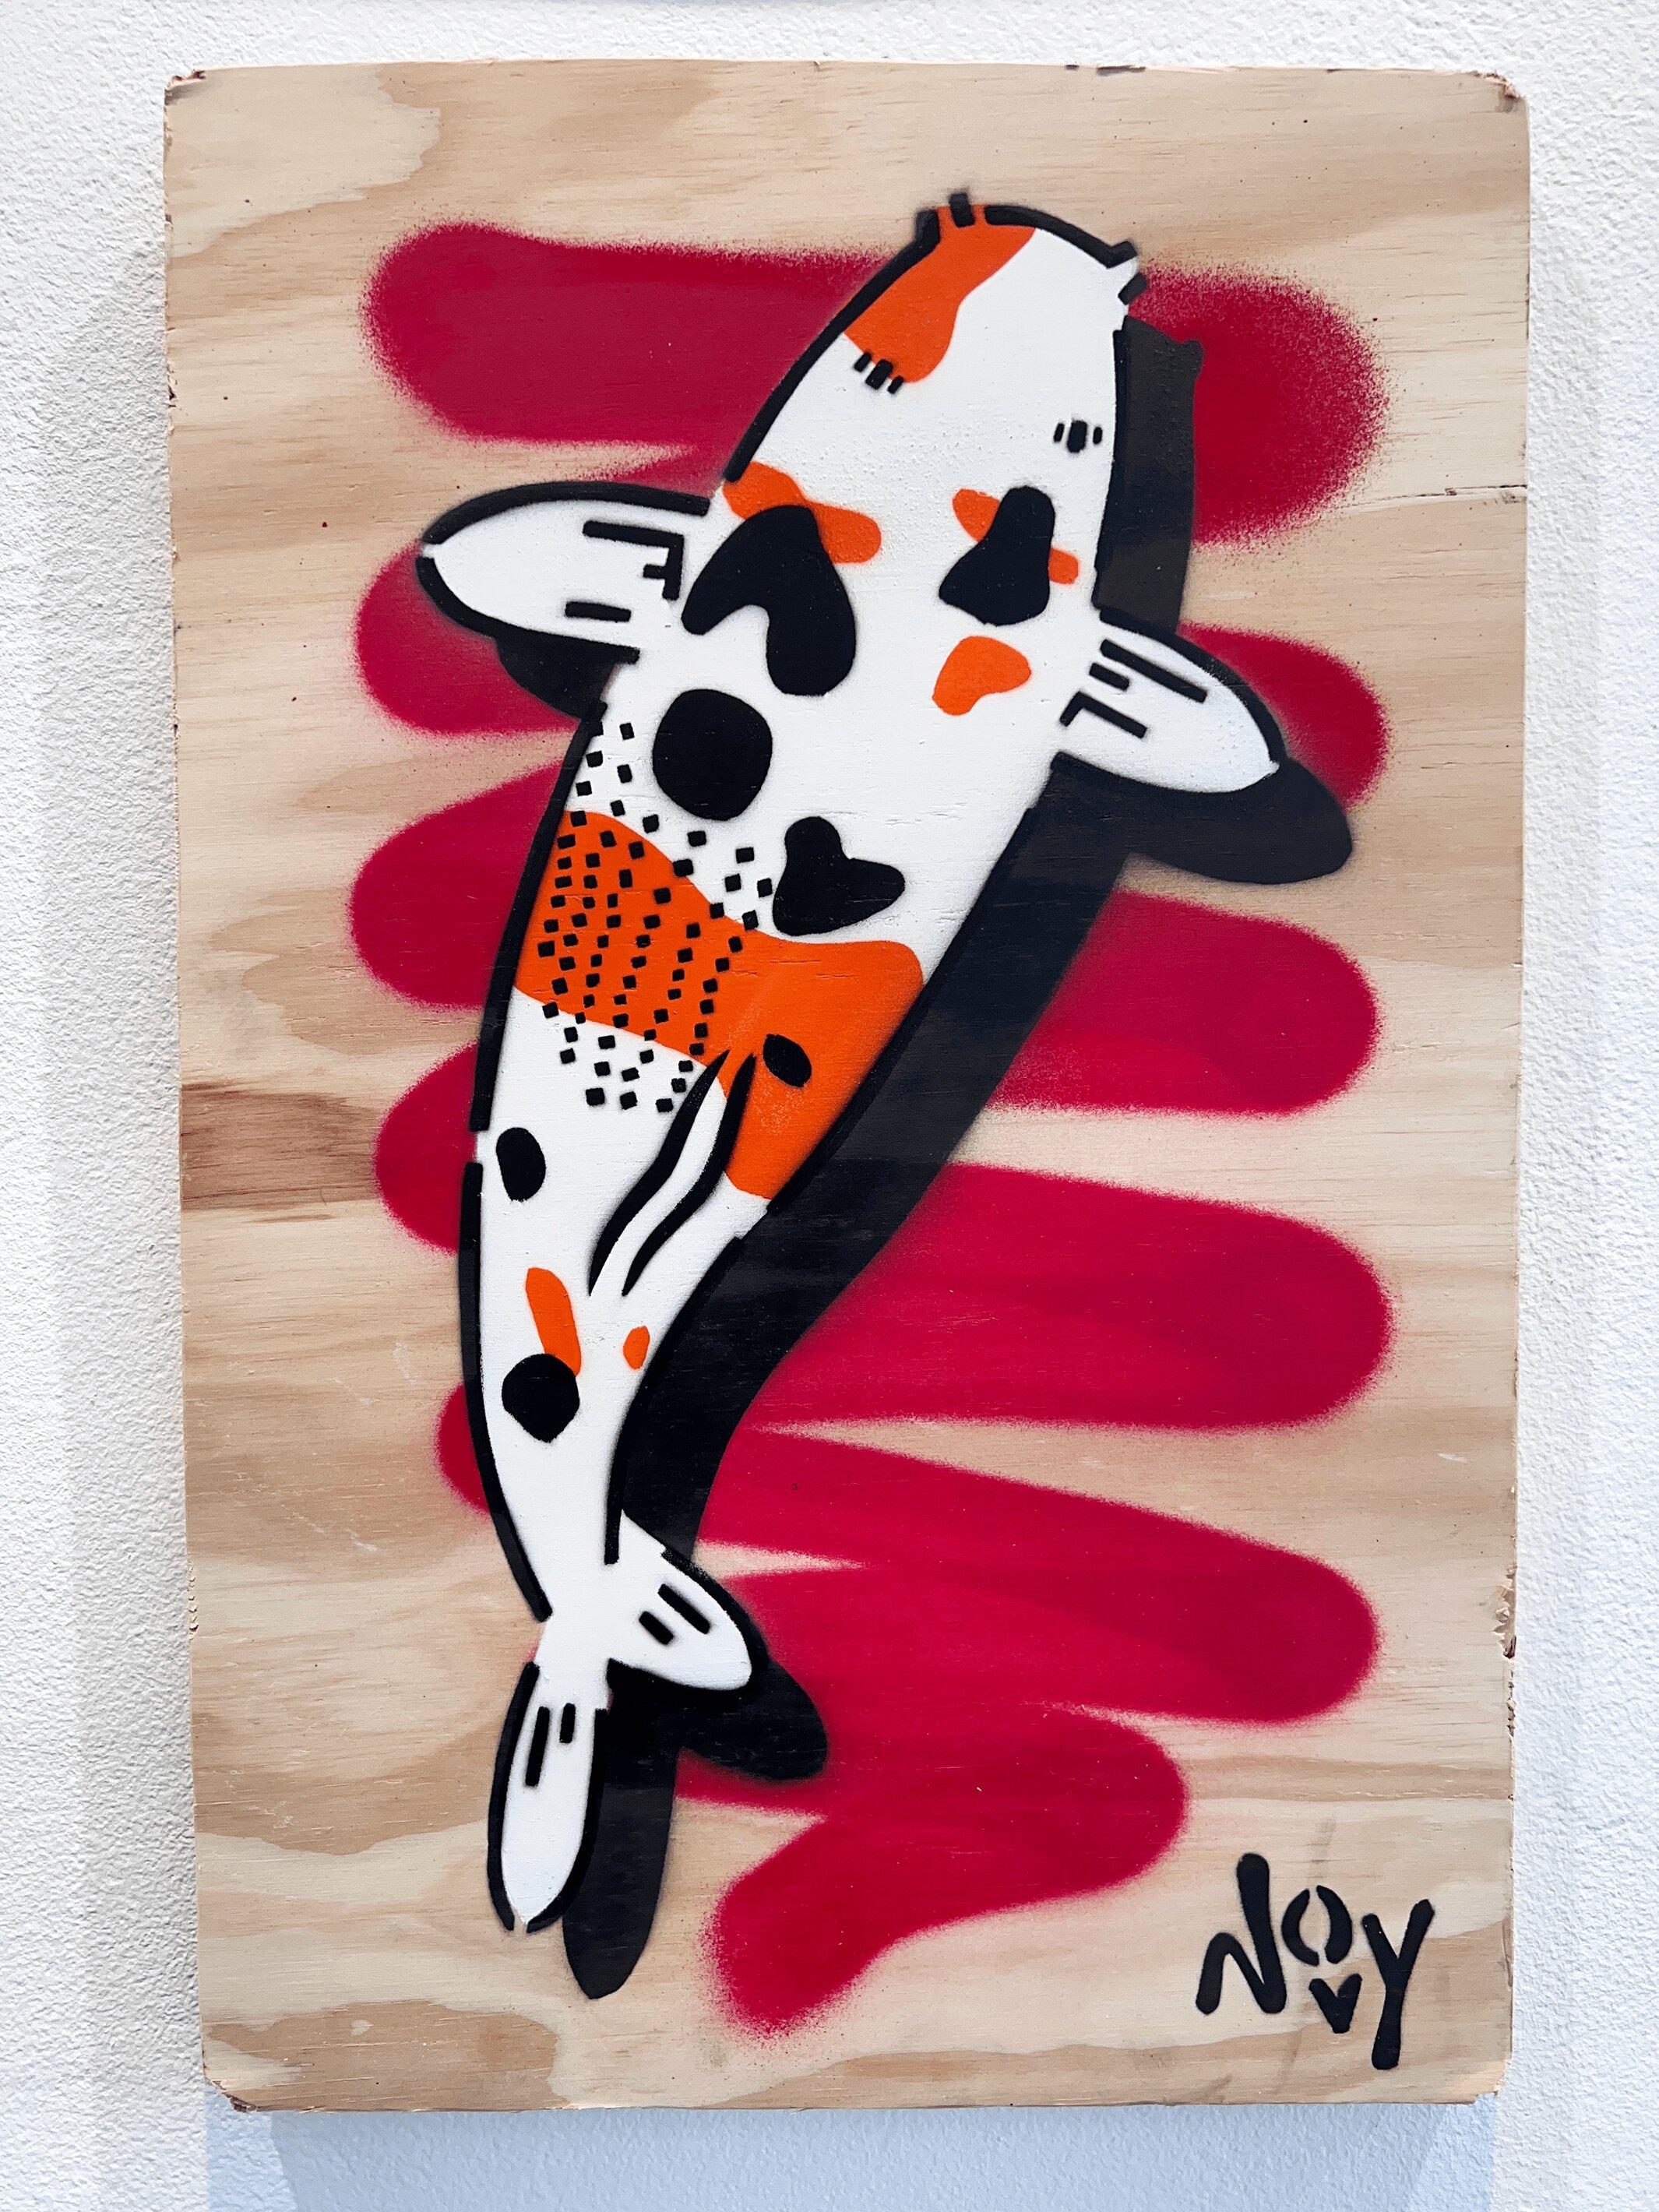 Love 2 - Koi Red Street Art - Painting by Jeremy Novy